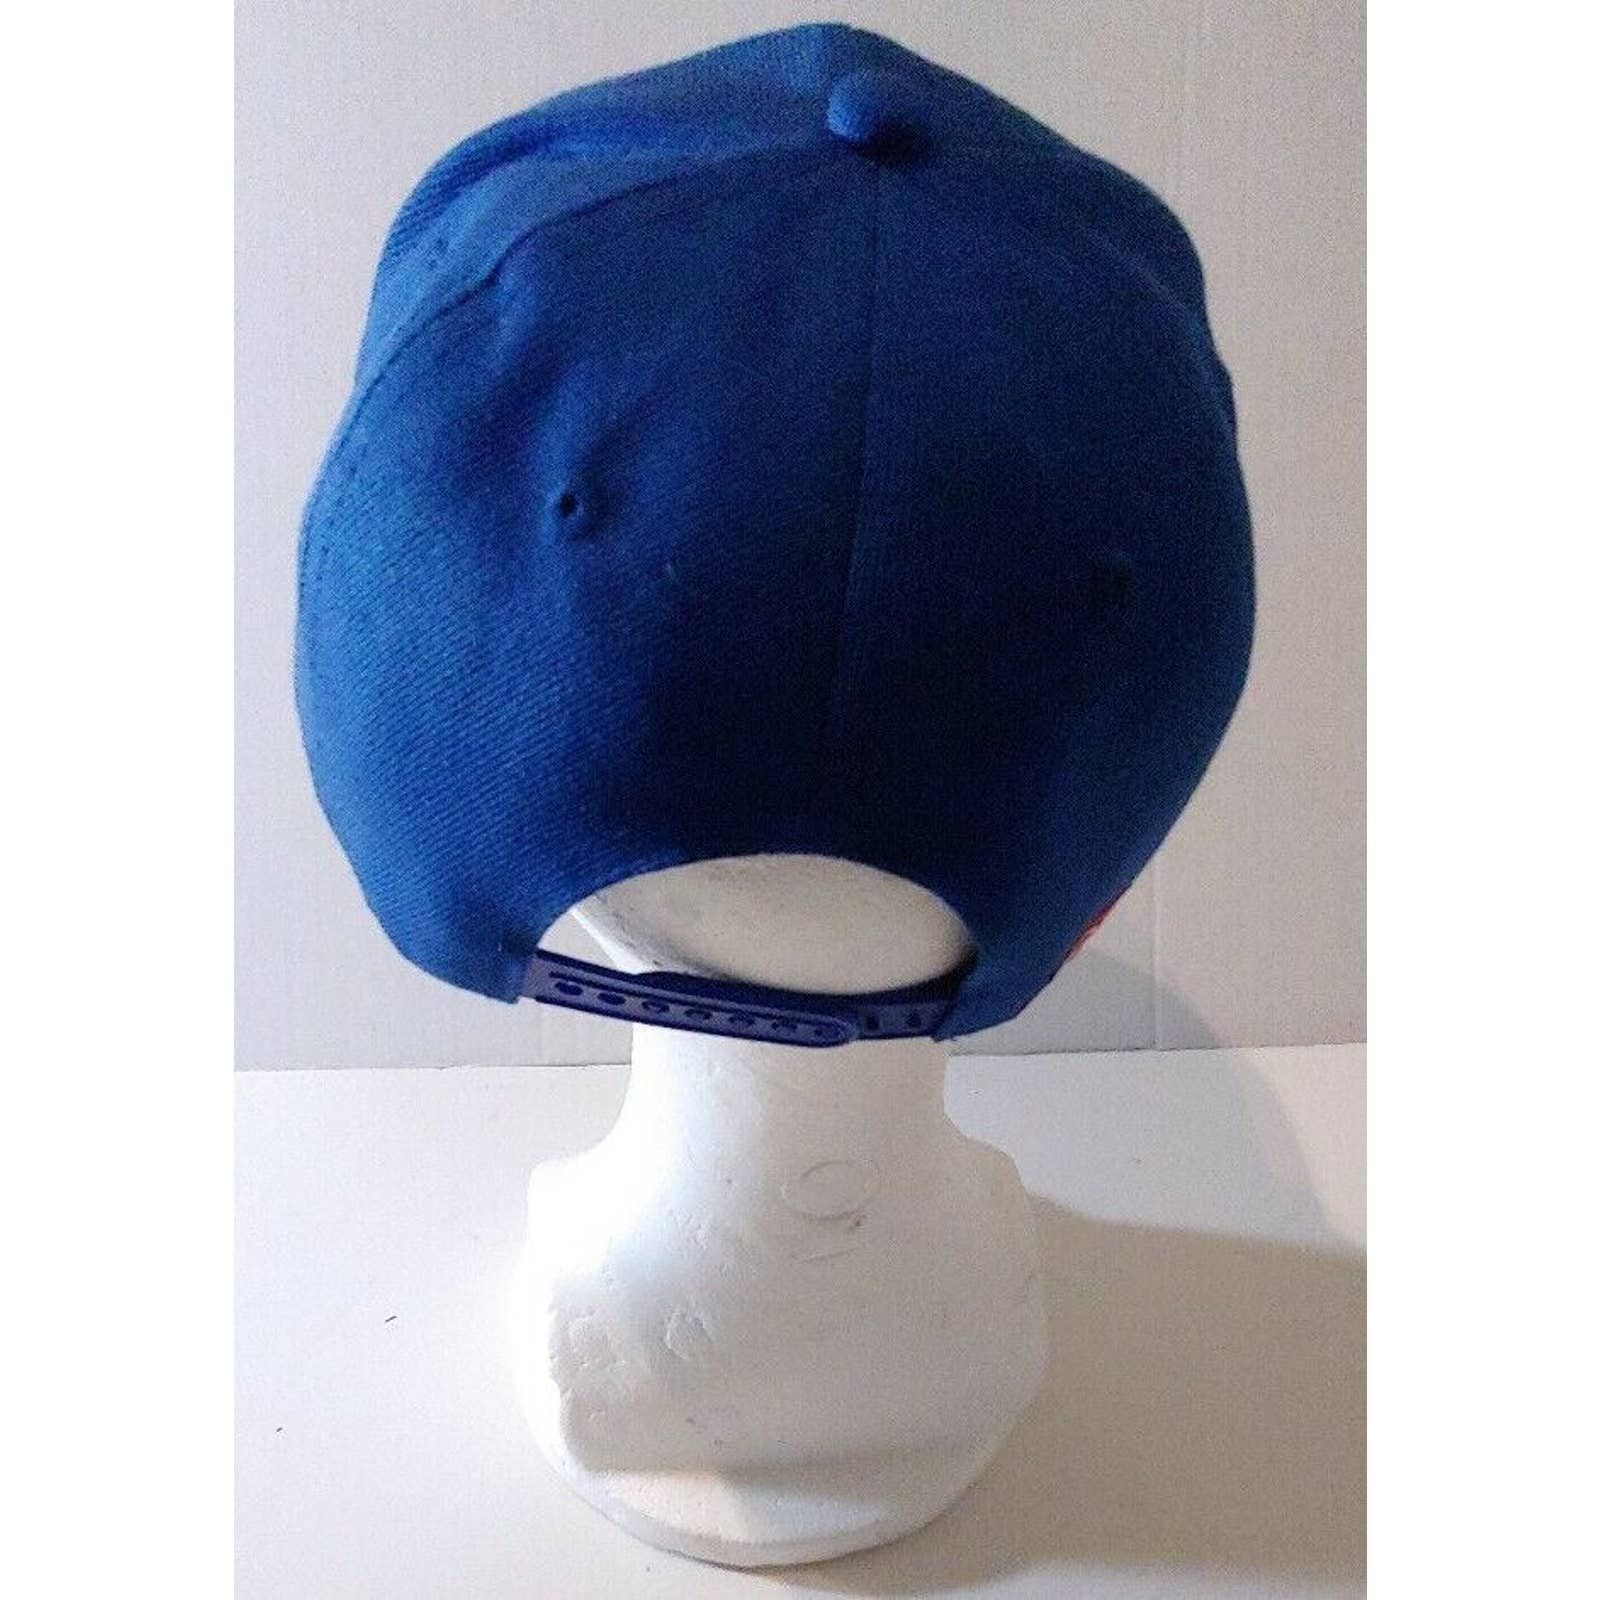 Other SCION TOYOTA Baseball Cap Hat Adjustable Blue Snapback Size ONE SIZE - 4 Thumbnail